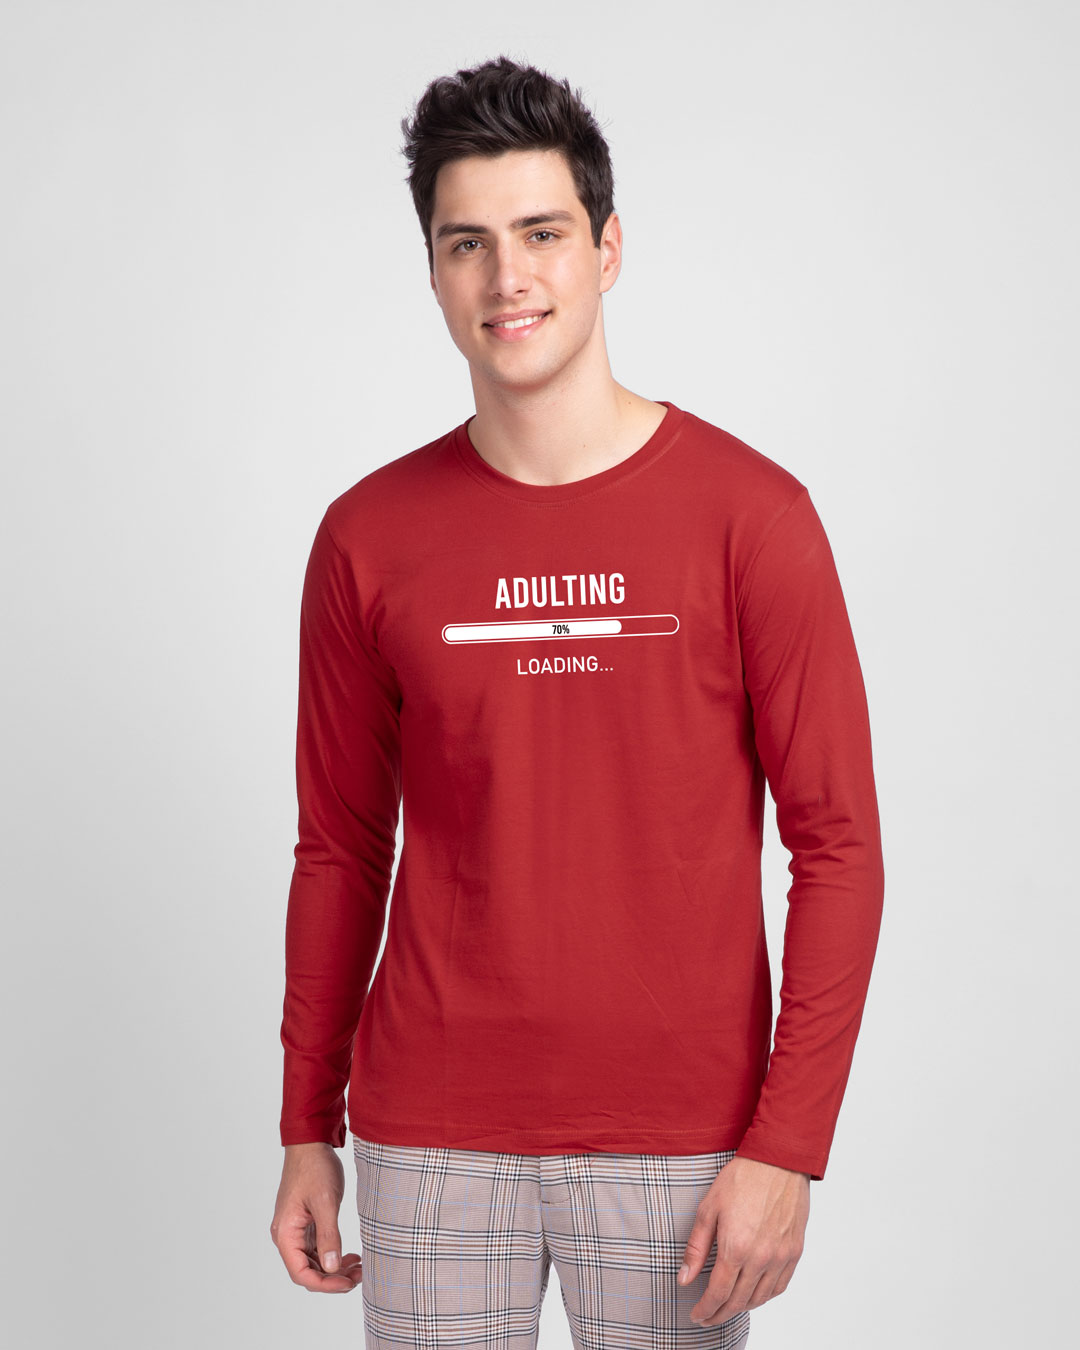 Buy Error Printed Full Sleeve T-Shirt For Men Online India @ Bewakoof.com